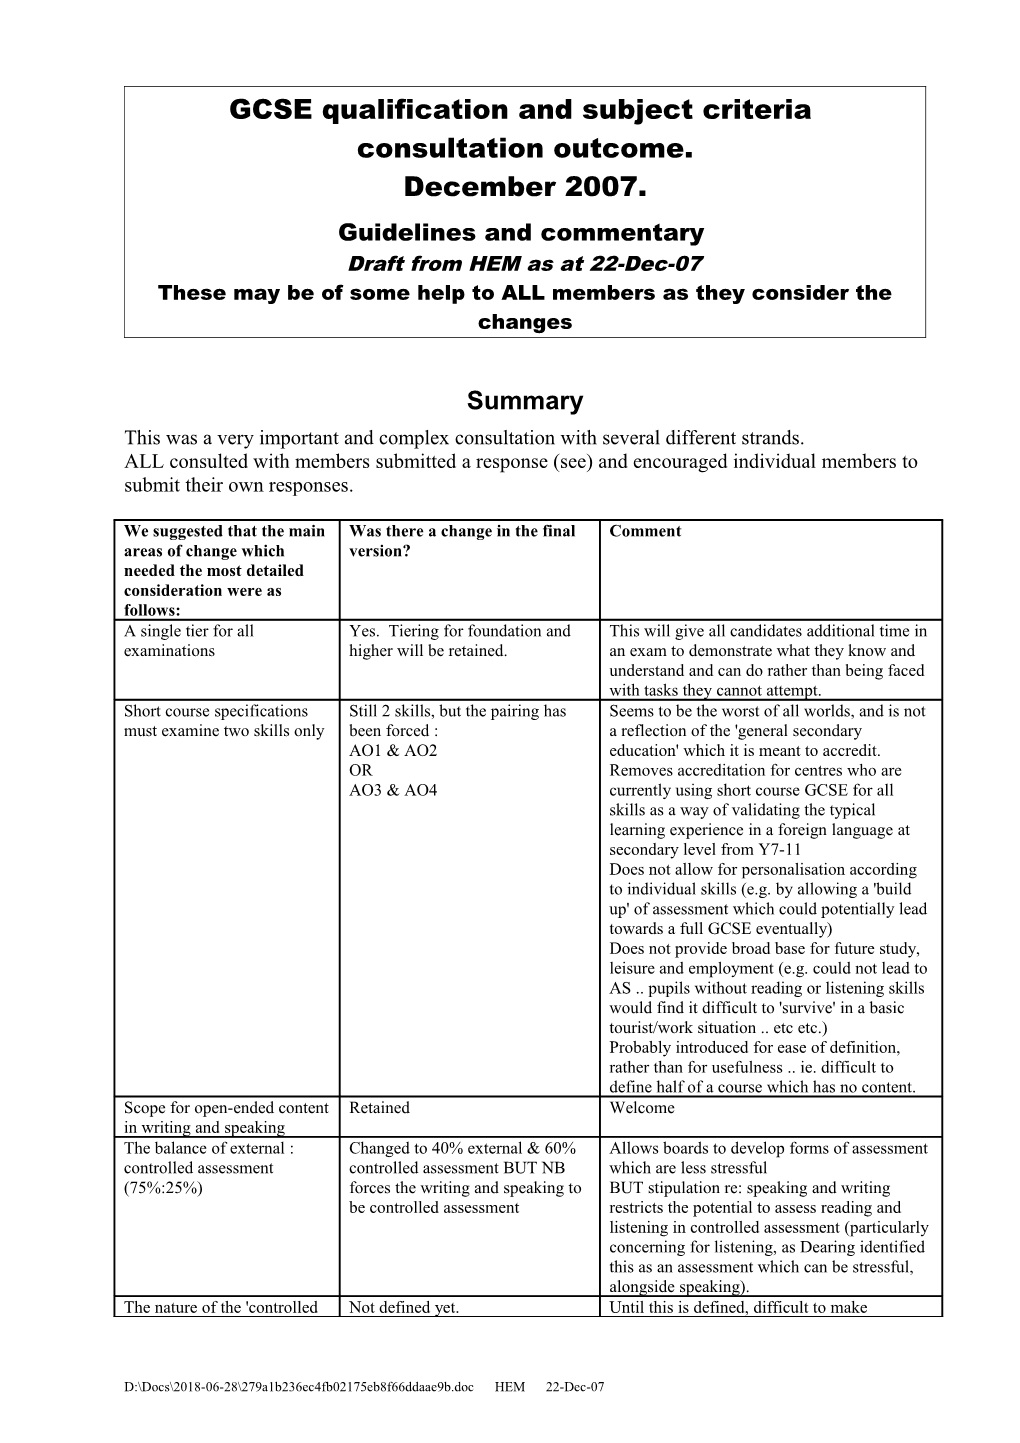 GCSE Qualification and Subject Criteria Consultation Questionnaire - June 2007